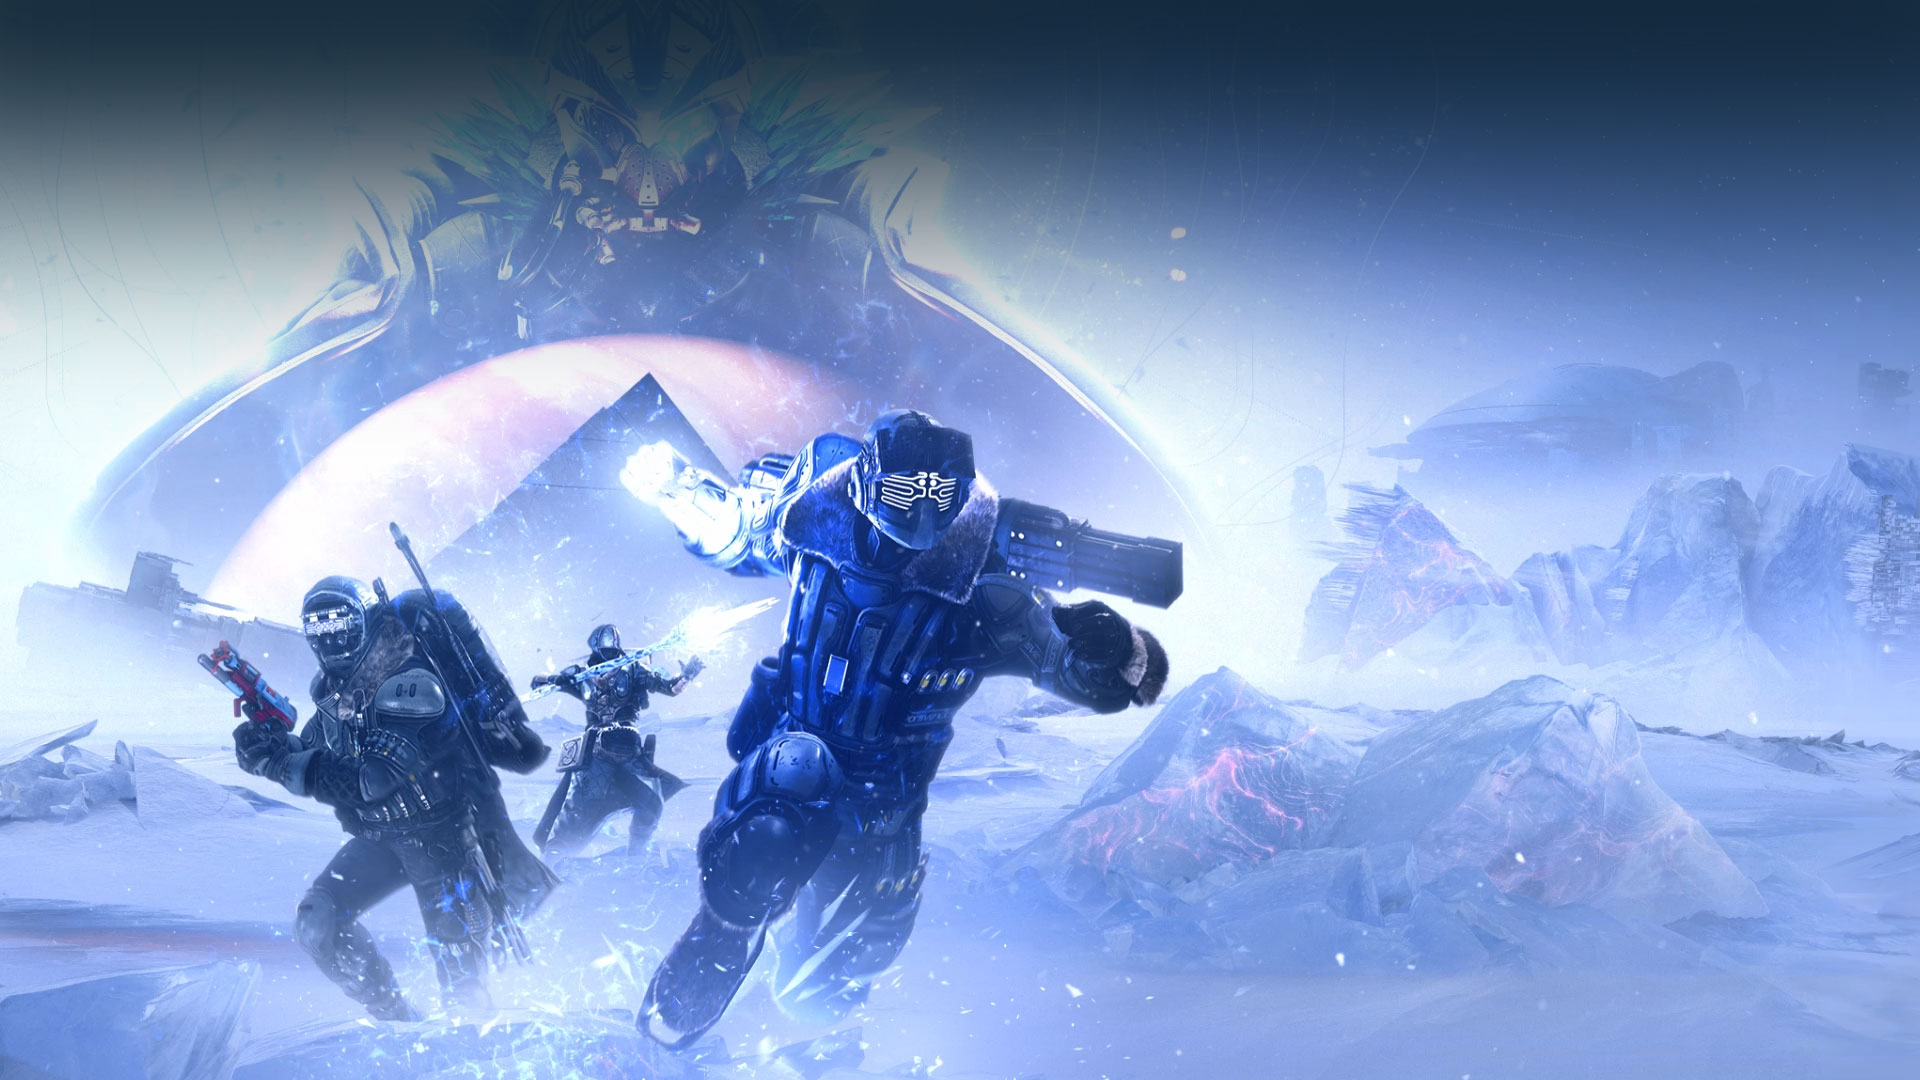 Destiny 2 Trials Weapons This Week: Trials of Osiris Rewards